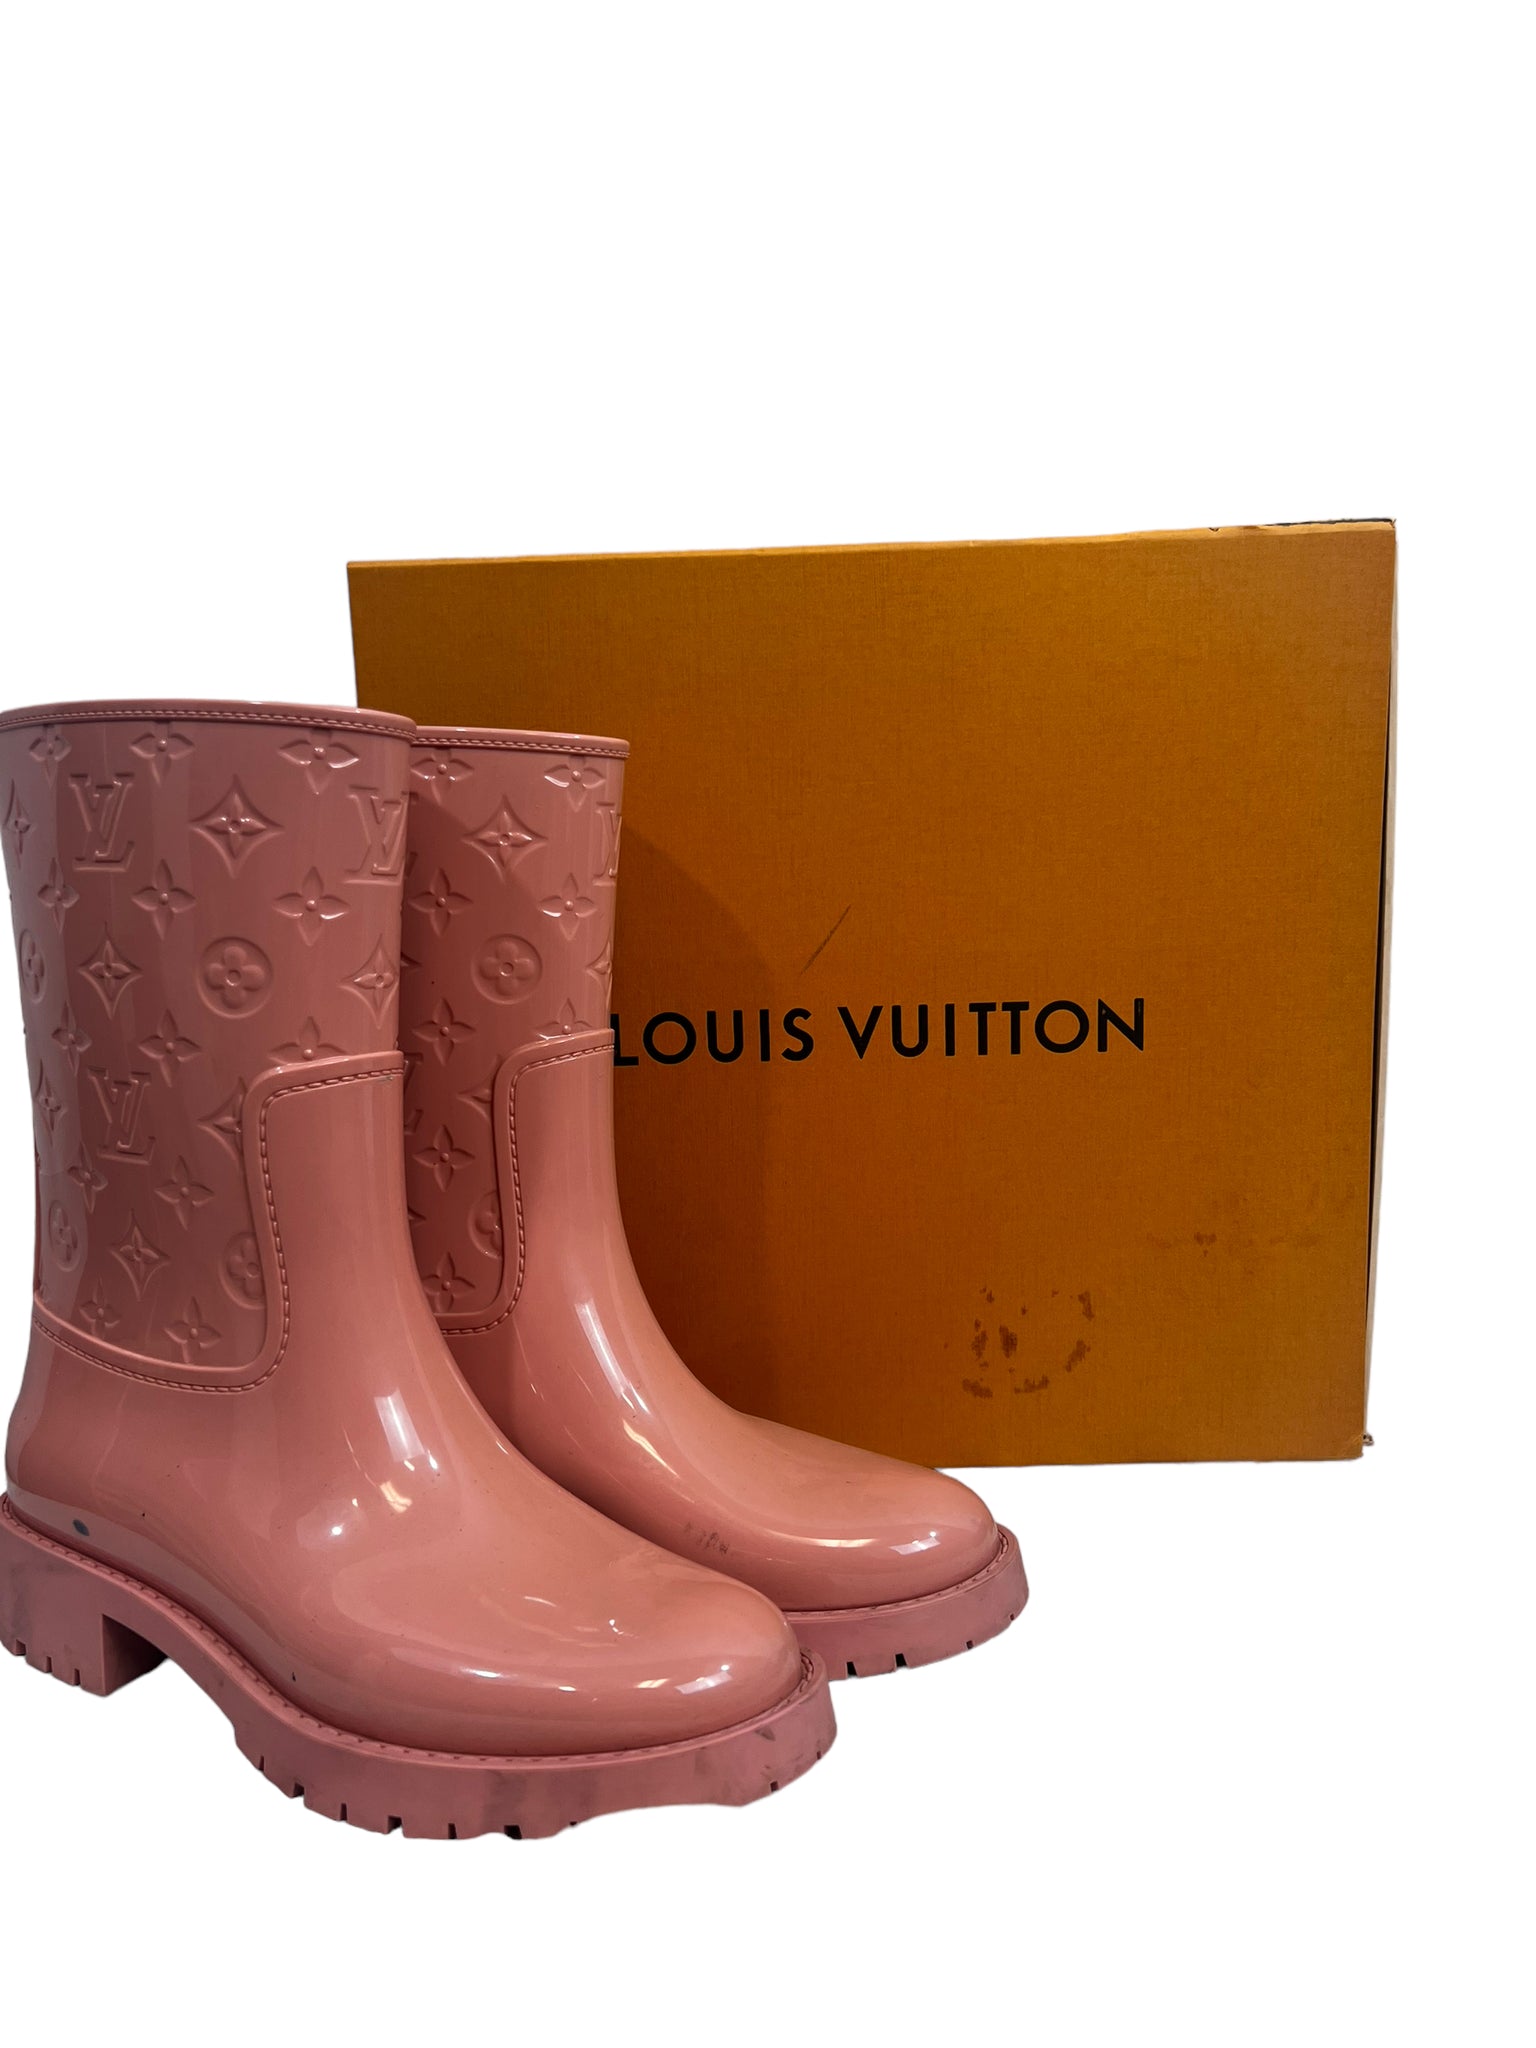 Louis Vuitton Rainboots Pink – thankunext.us